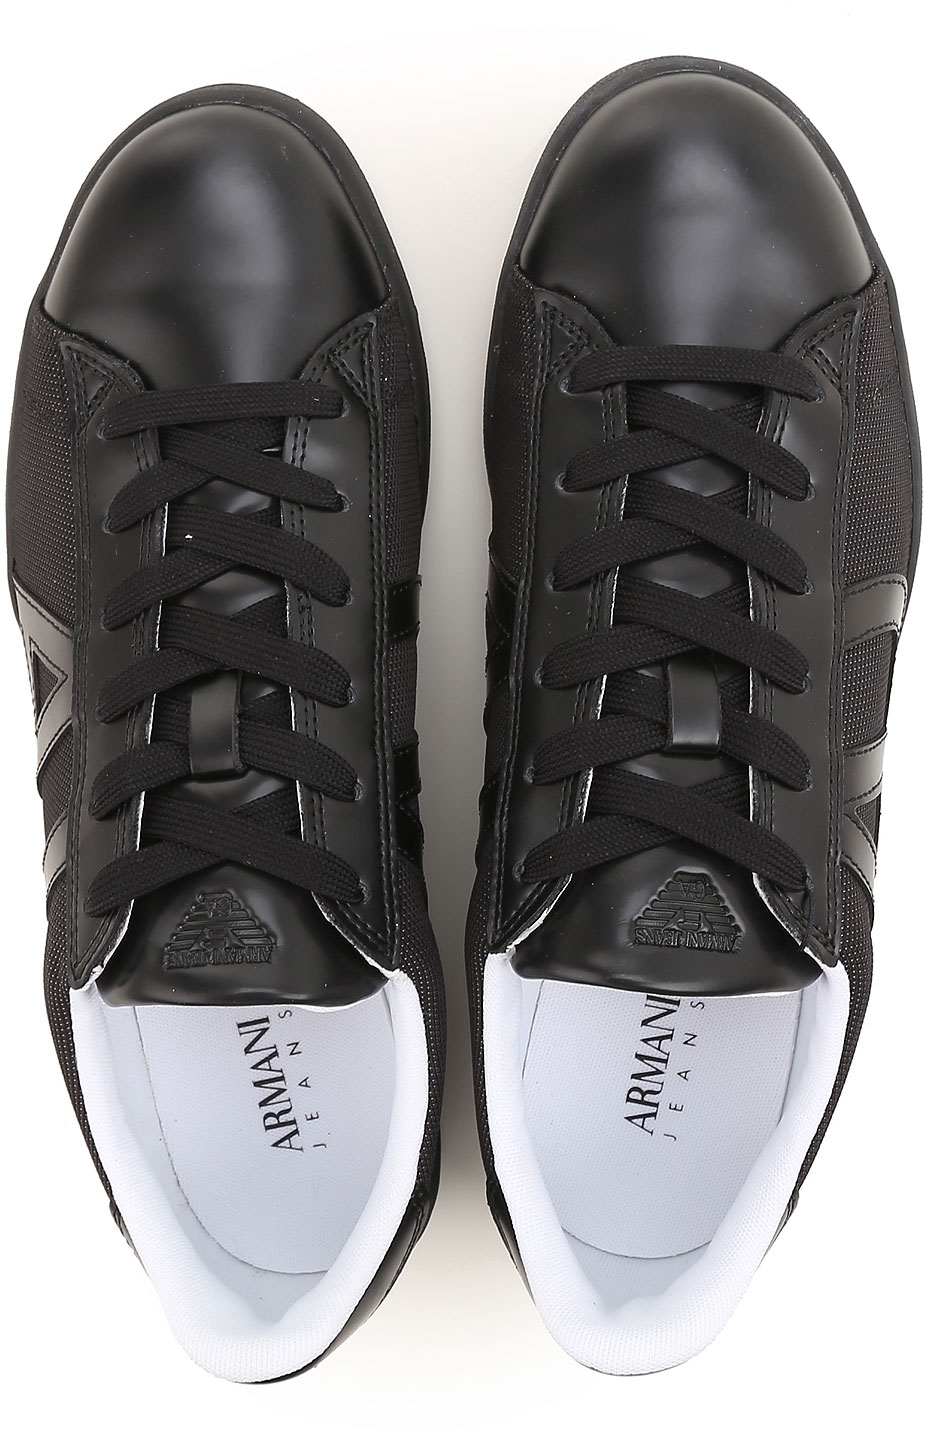 Mens Shoes Emporio Armani, Style code: 935565-cc50320-